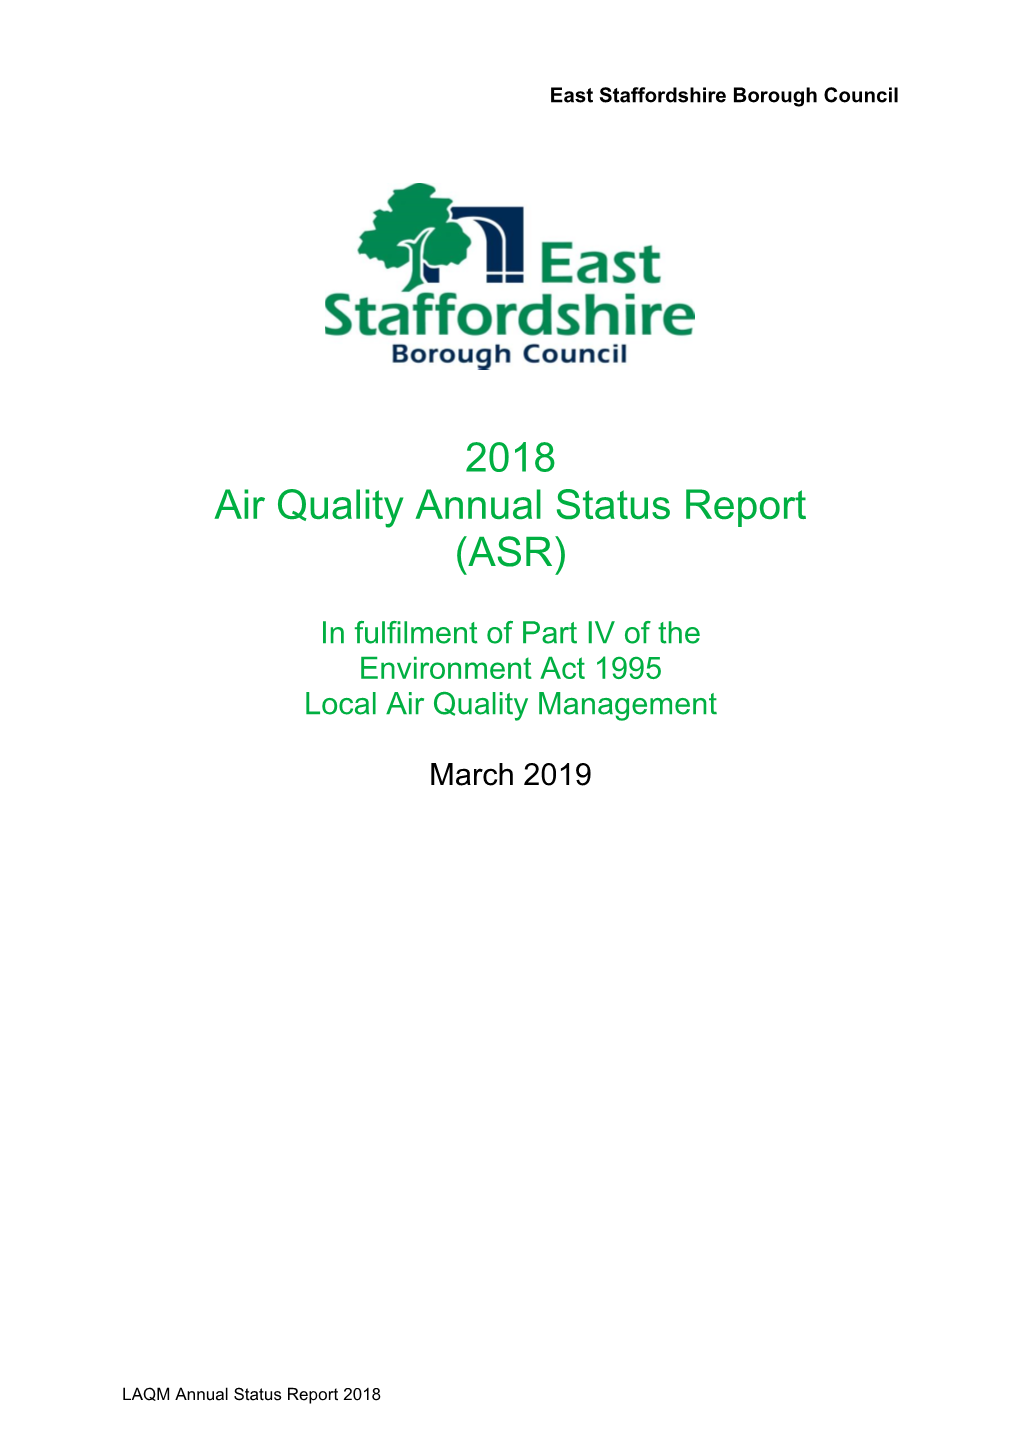 Annual Status Report 2018 East Staffordshire Borough Council